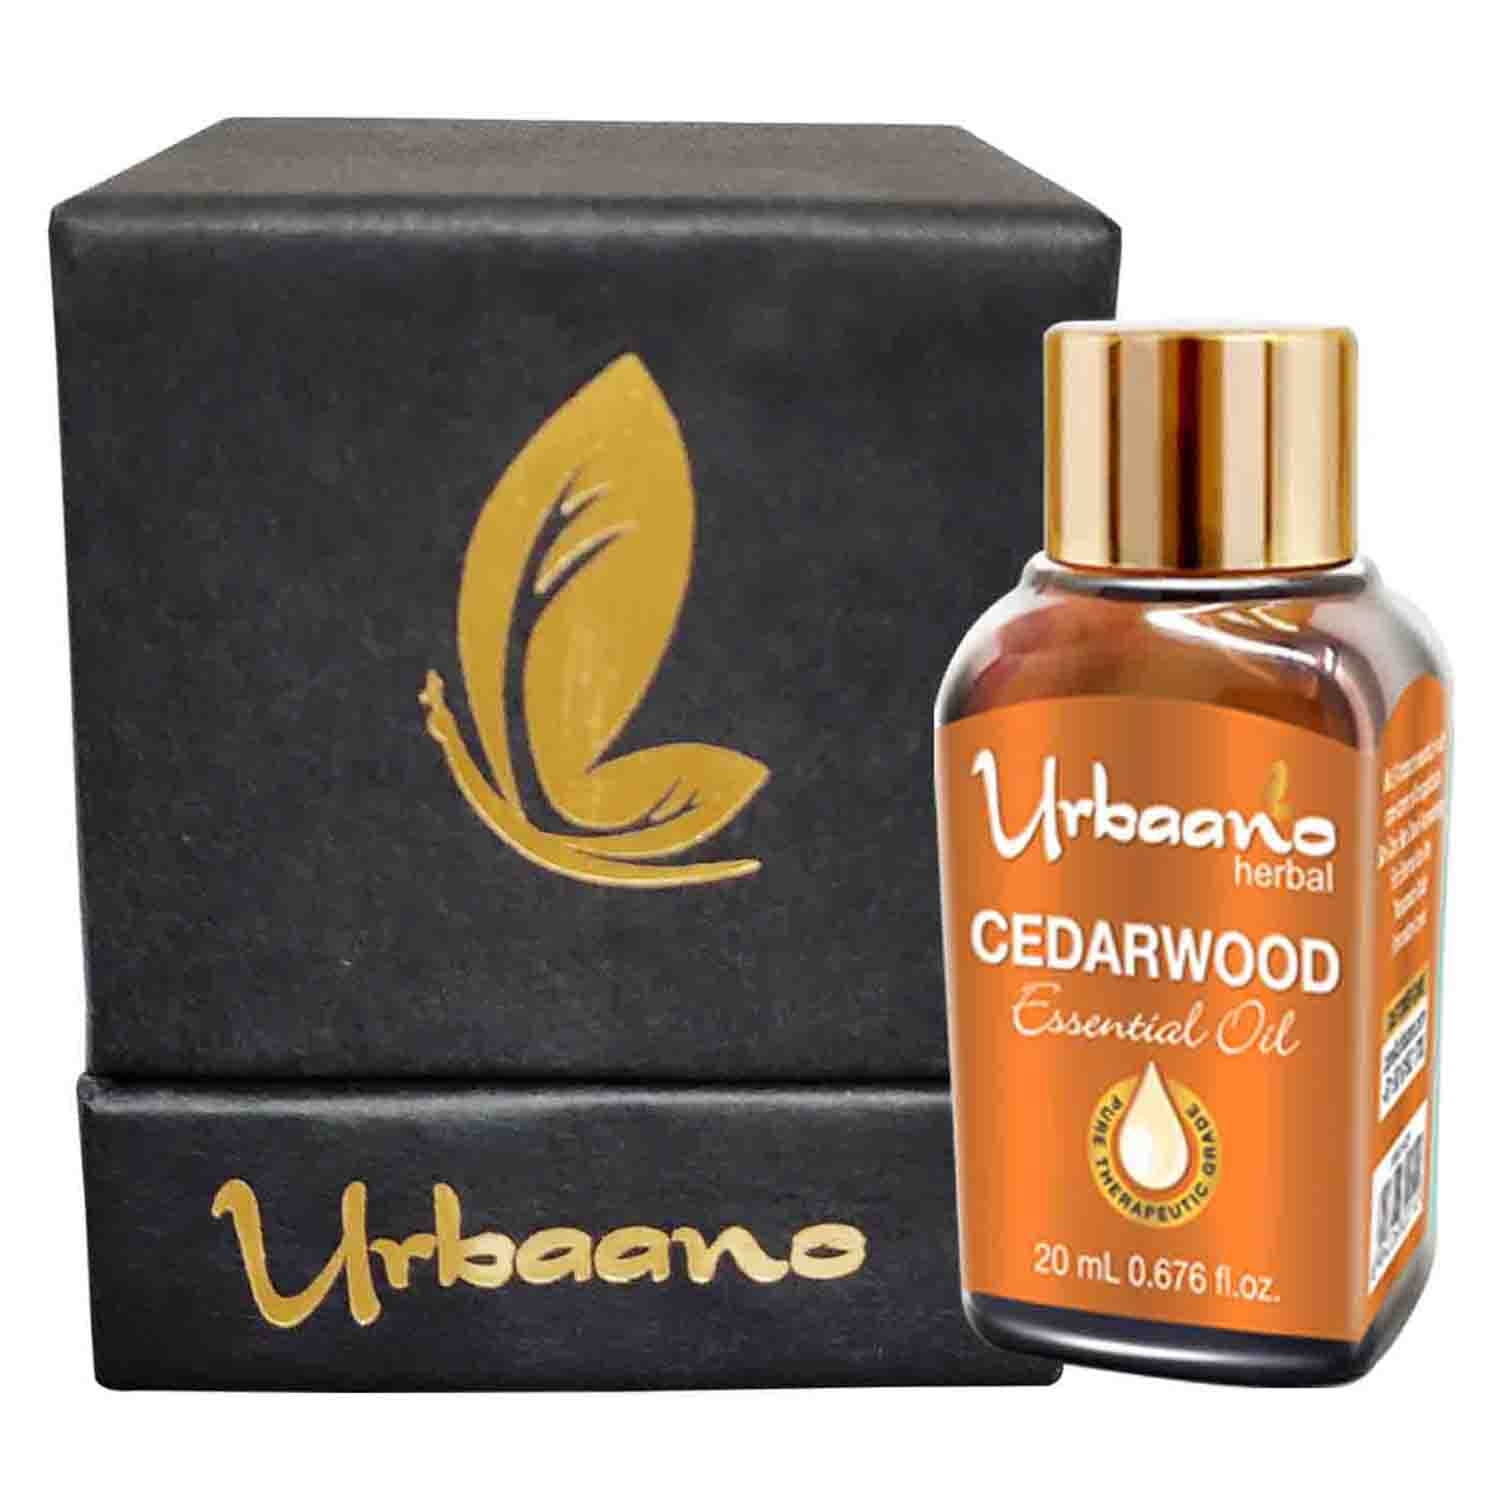 Urbaano Herbal | Urbaano Herbal Cedarwood Essential Oil for Aromatherapy natural & Pure -20ml 0